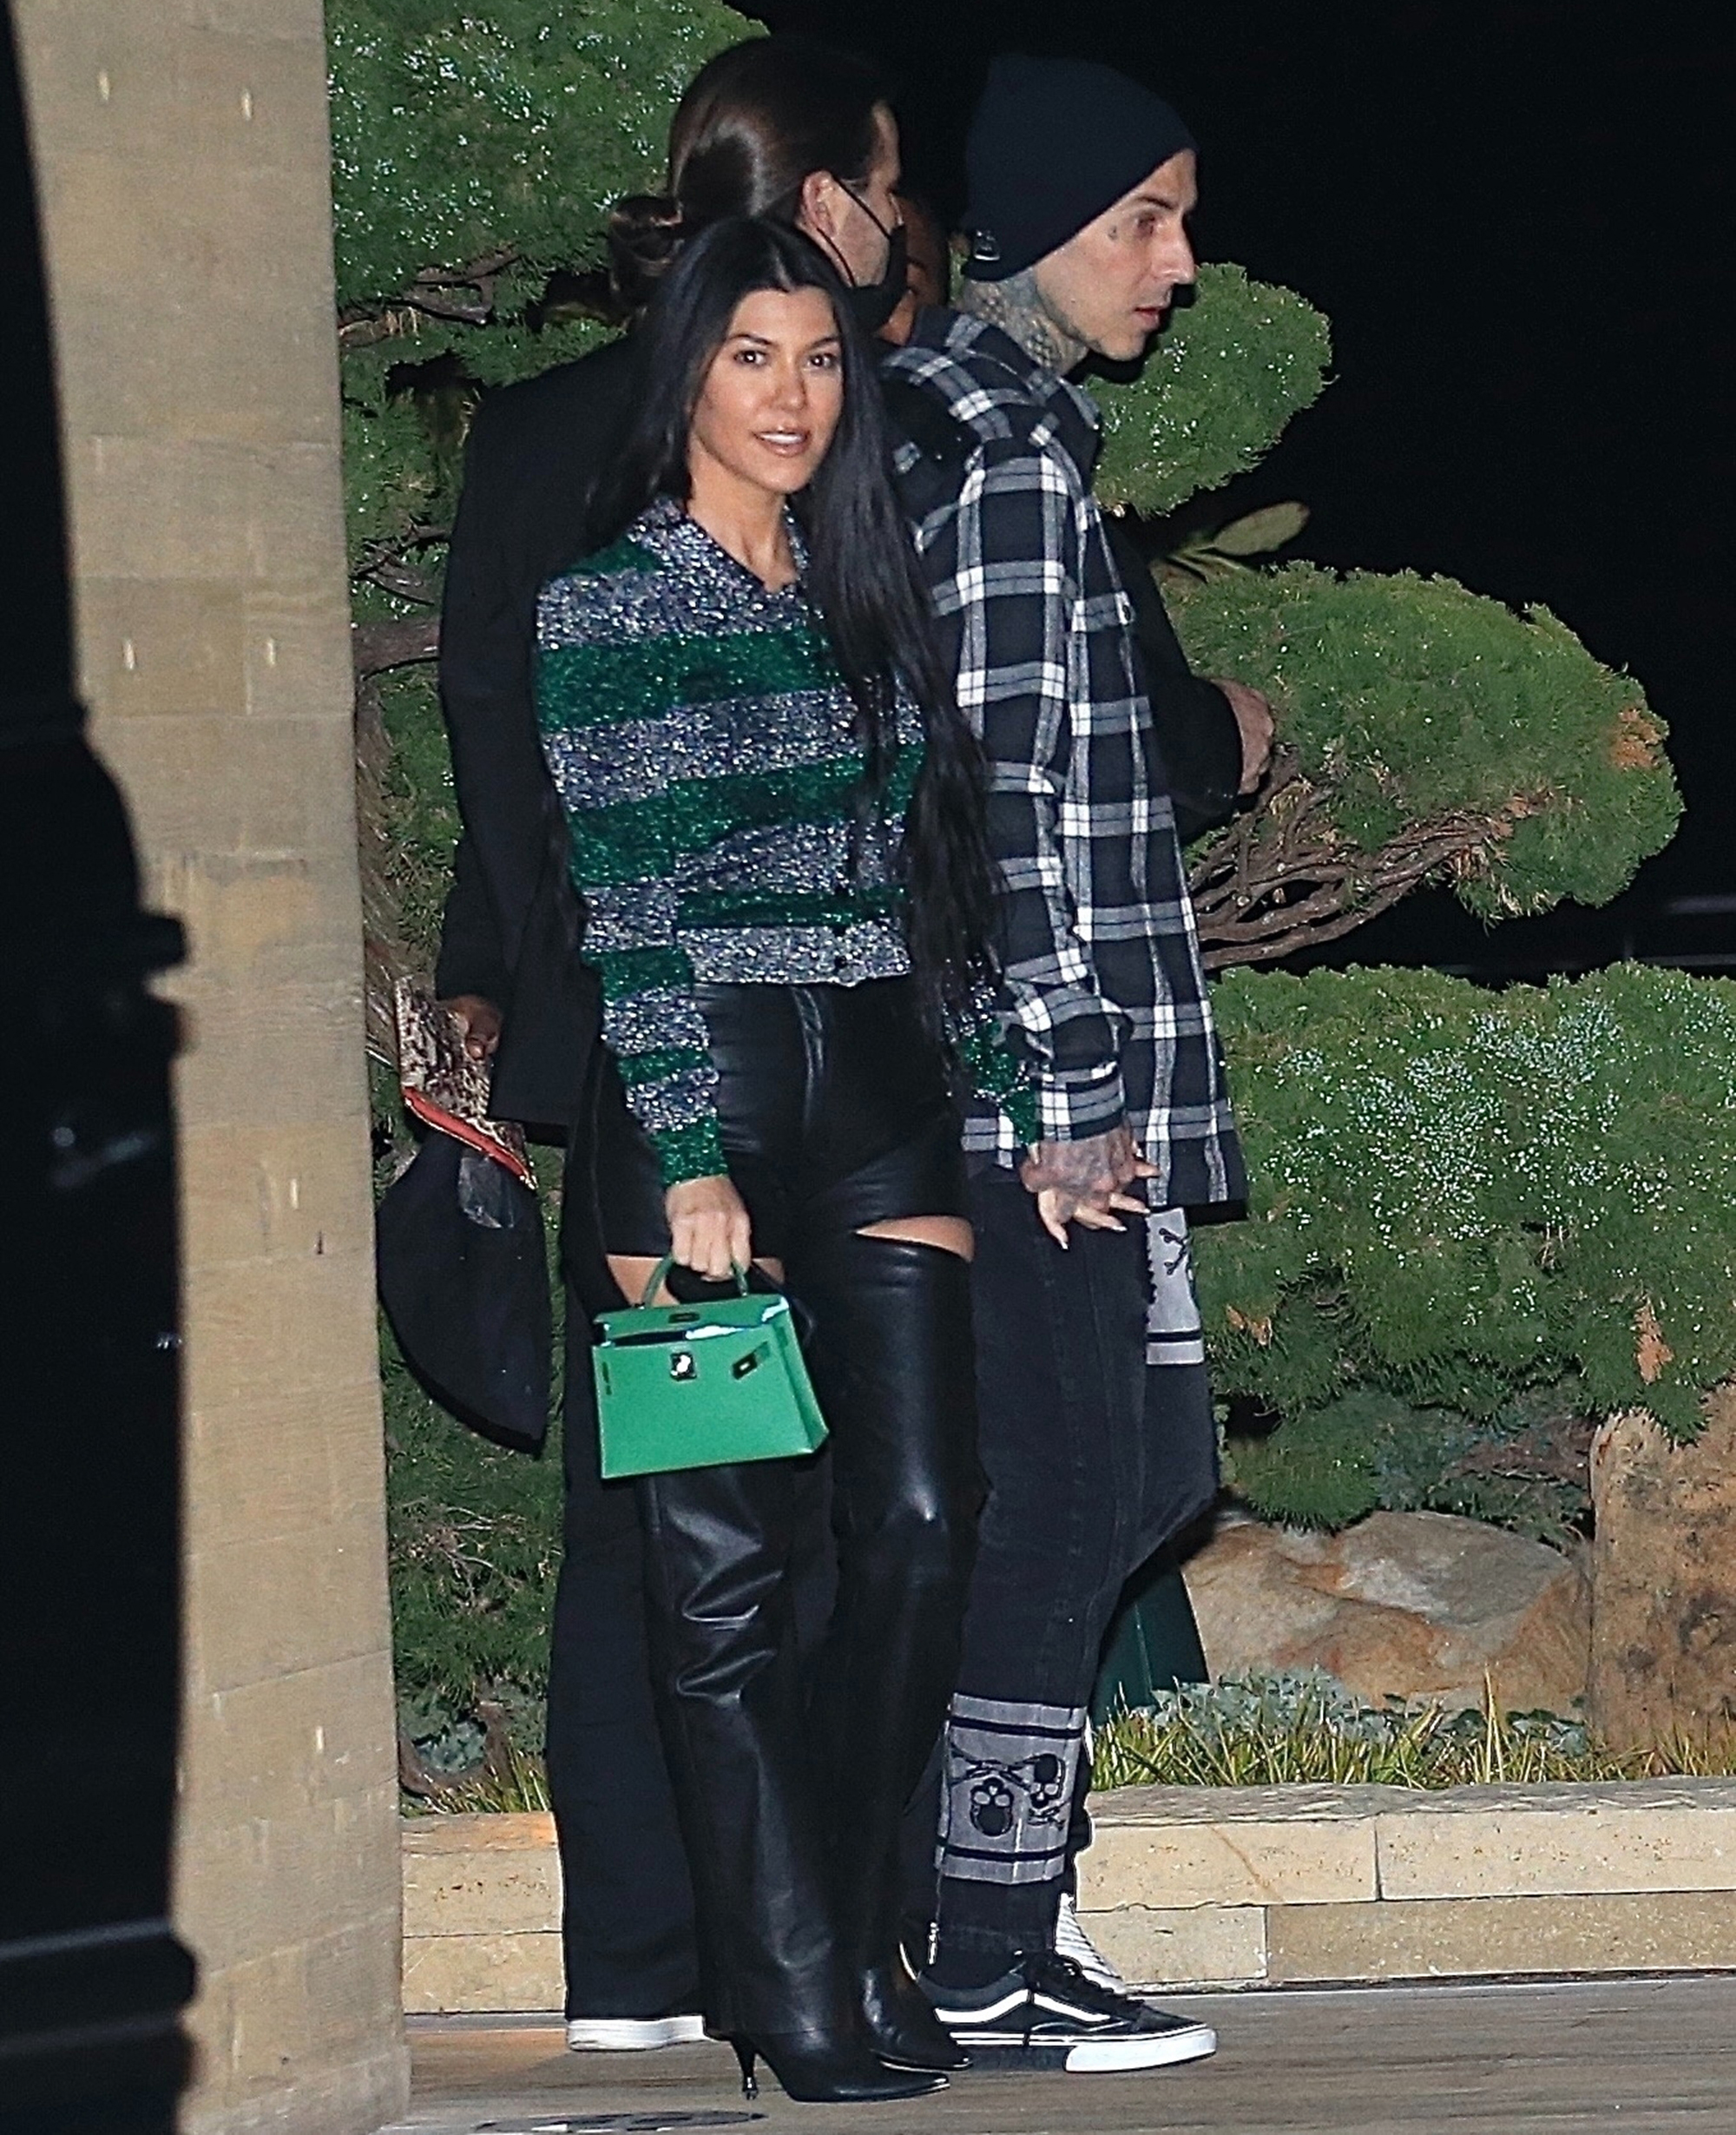 Kourtney Kardashian and boyfriend Travis Barker celebrated Easter Sunday with her famous family.